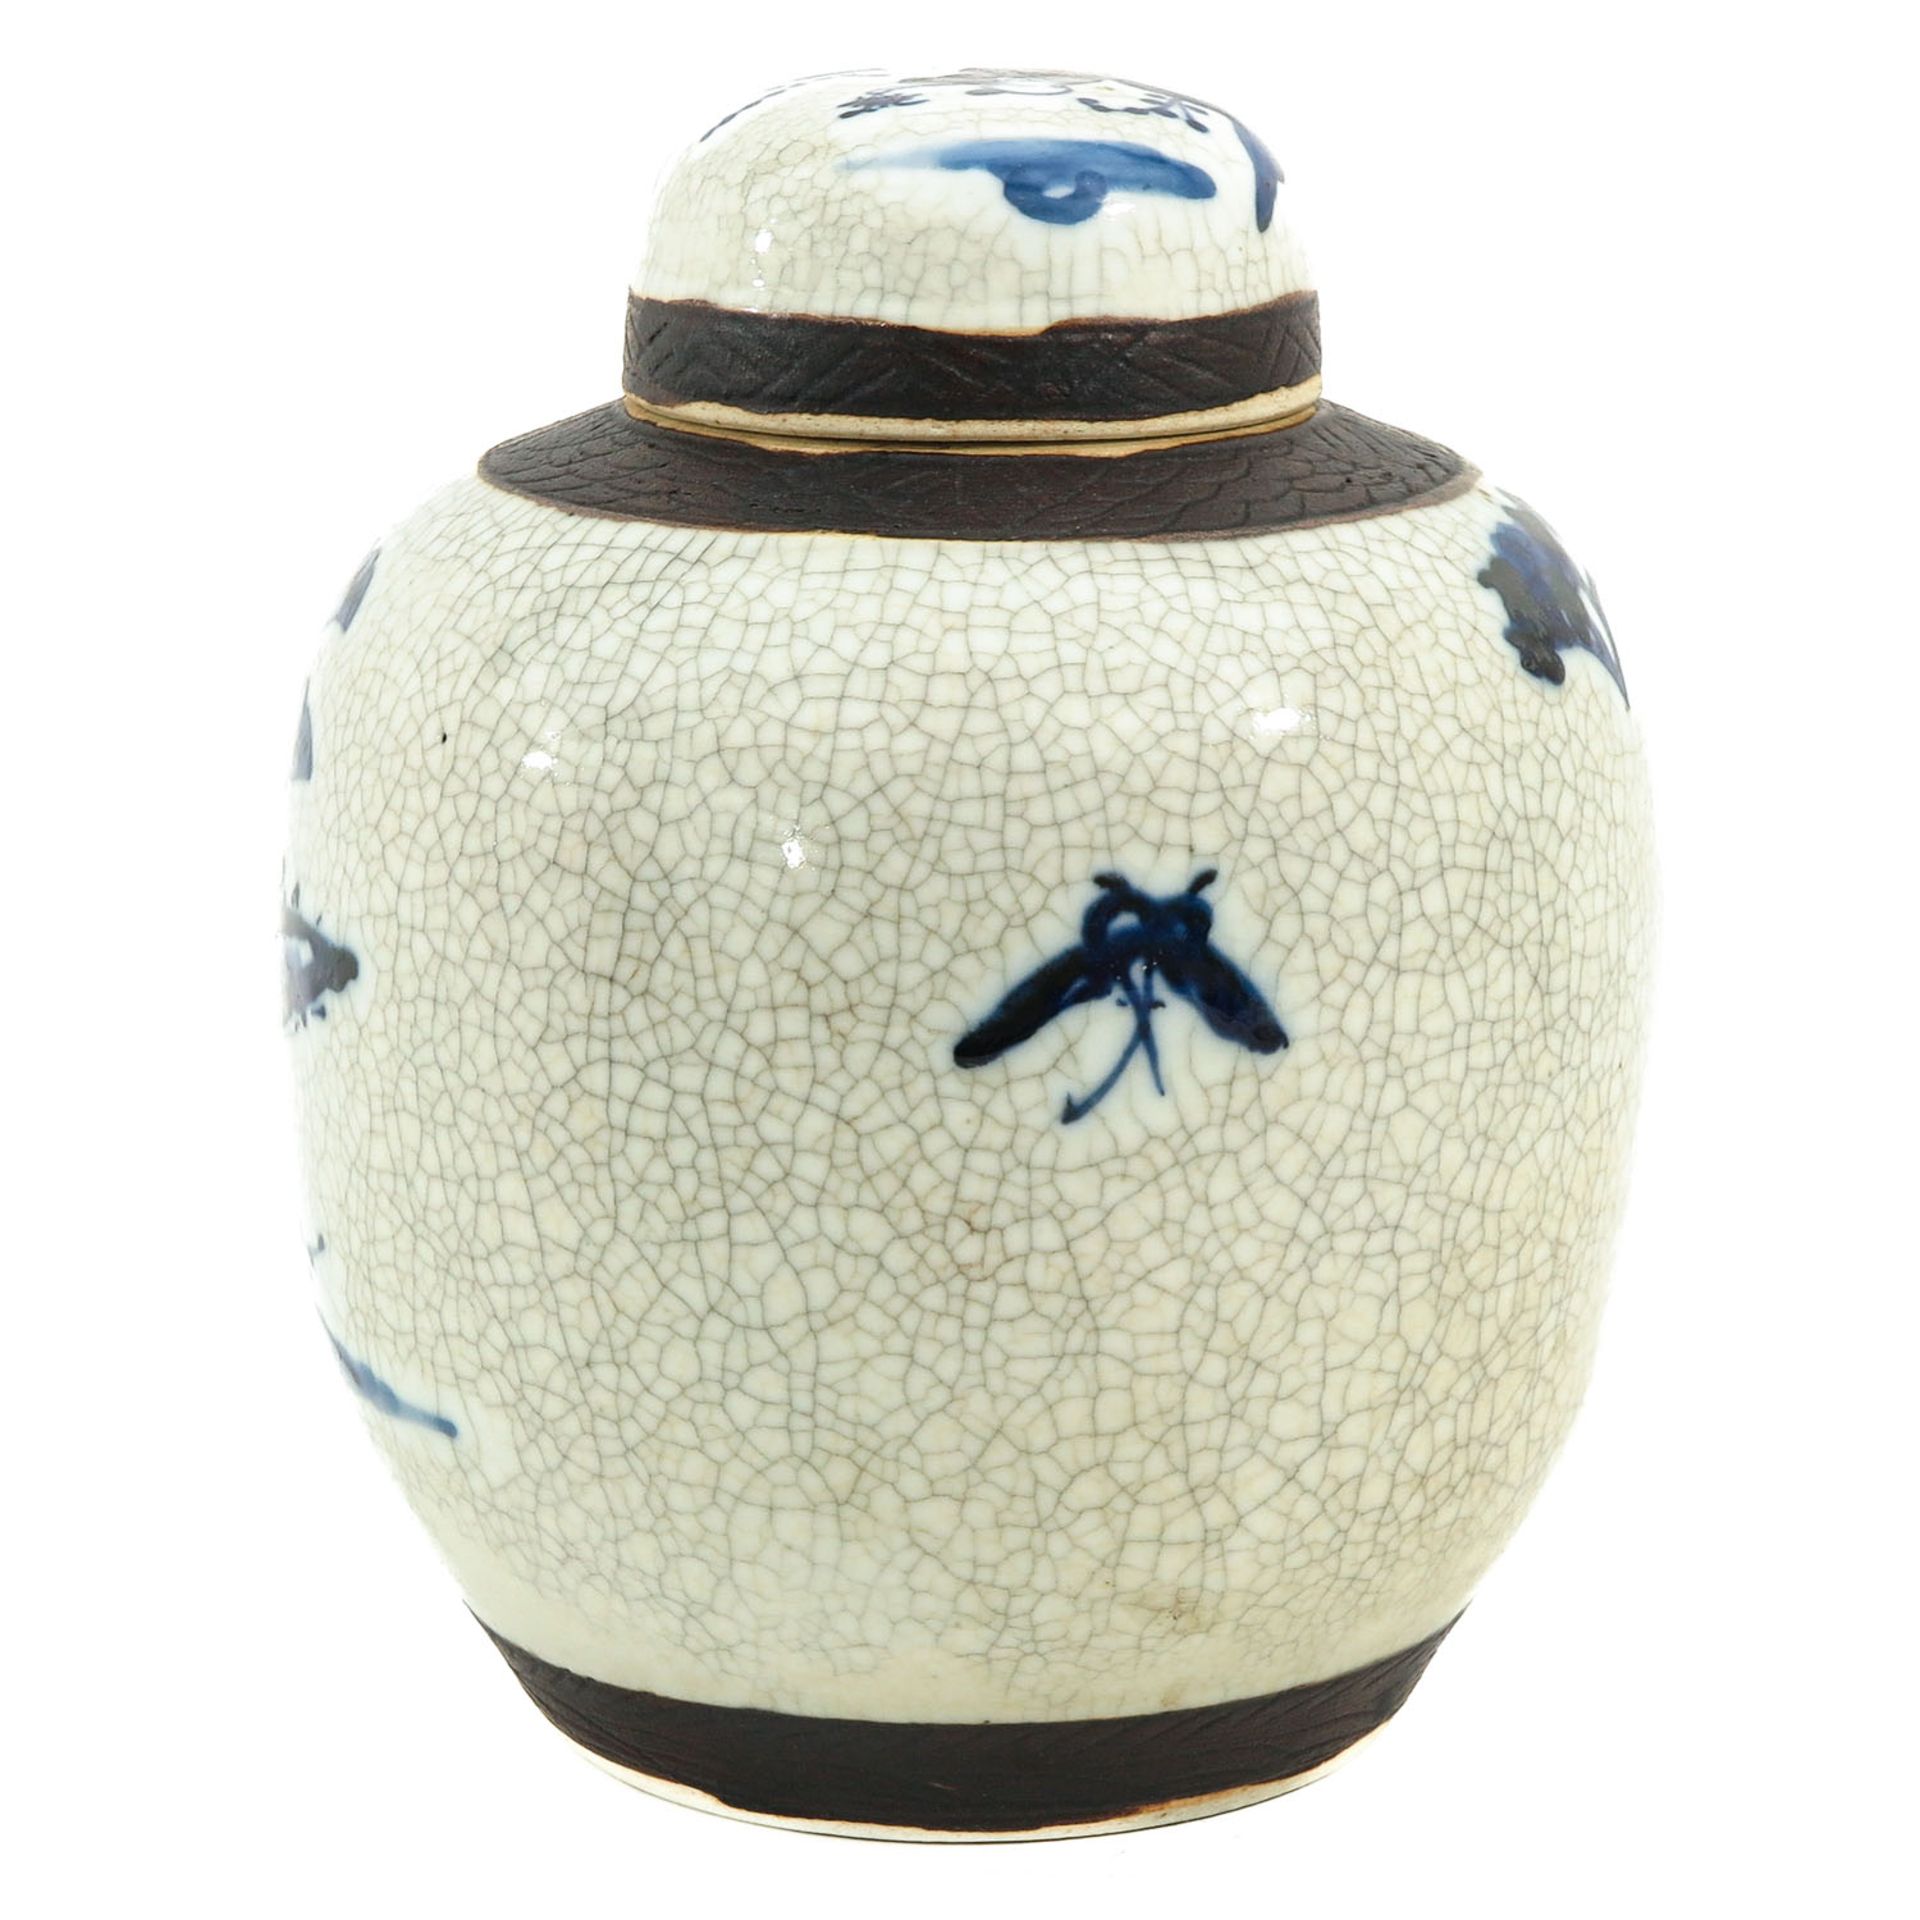 A Nanking Ginger Jar - Image 3 of 10